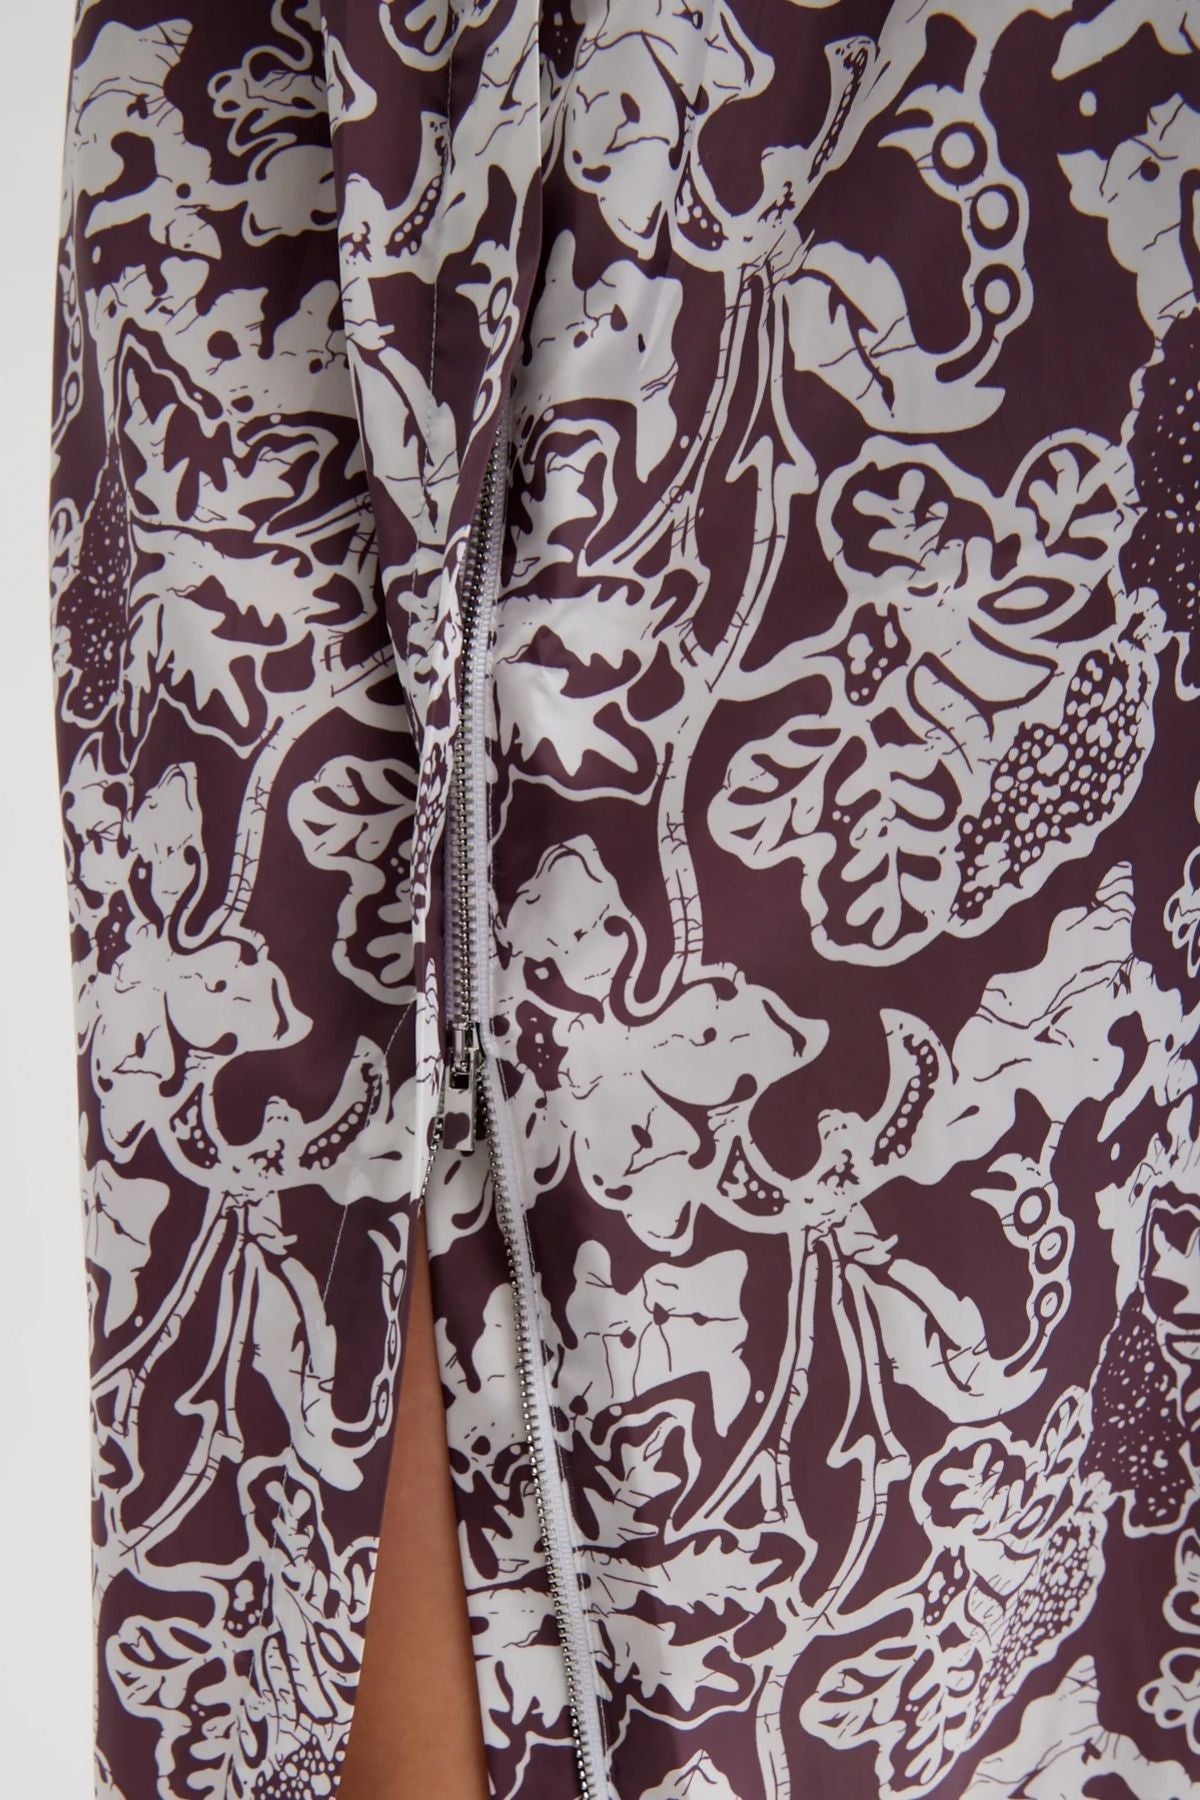 Tibi Recycled Nylon Batik Full Skirt - Cinnamon Multi